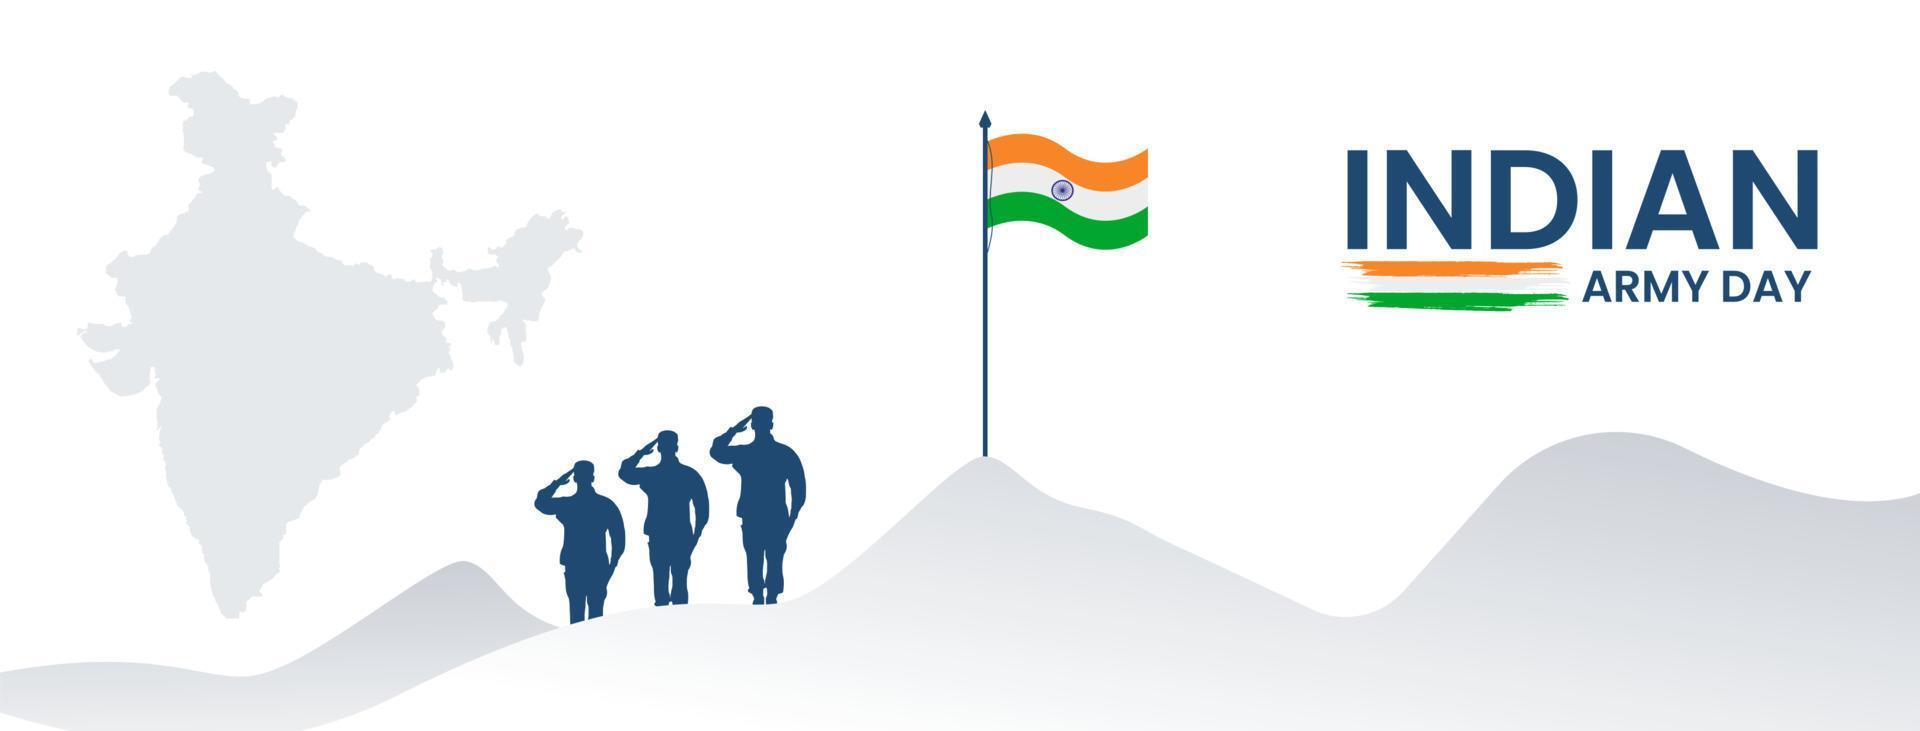 indiase legerdag webbannerontwerp vector